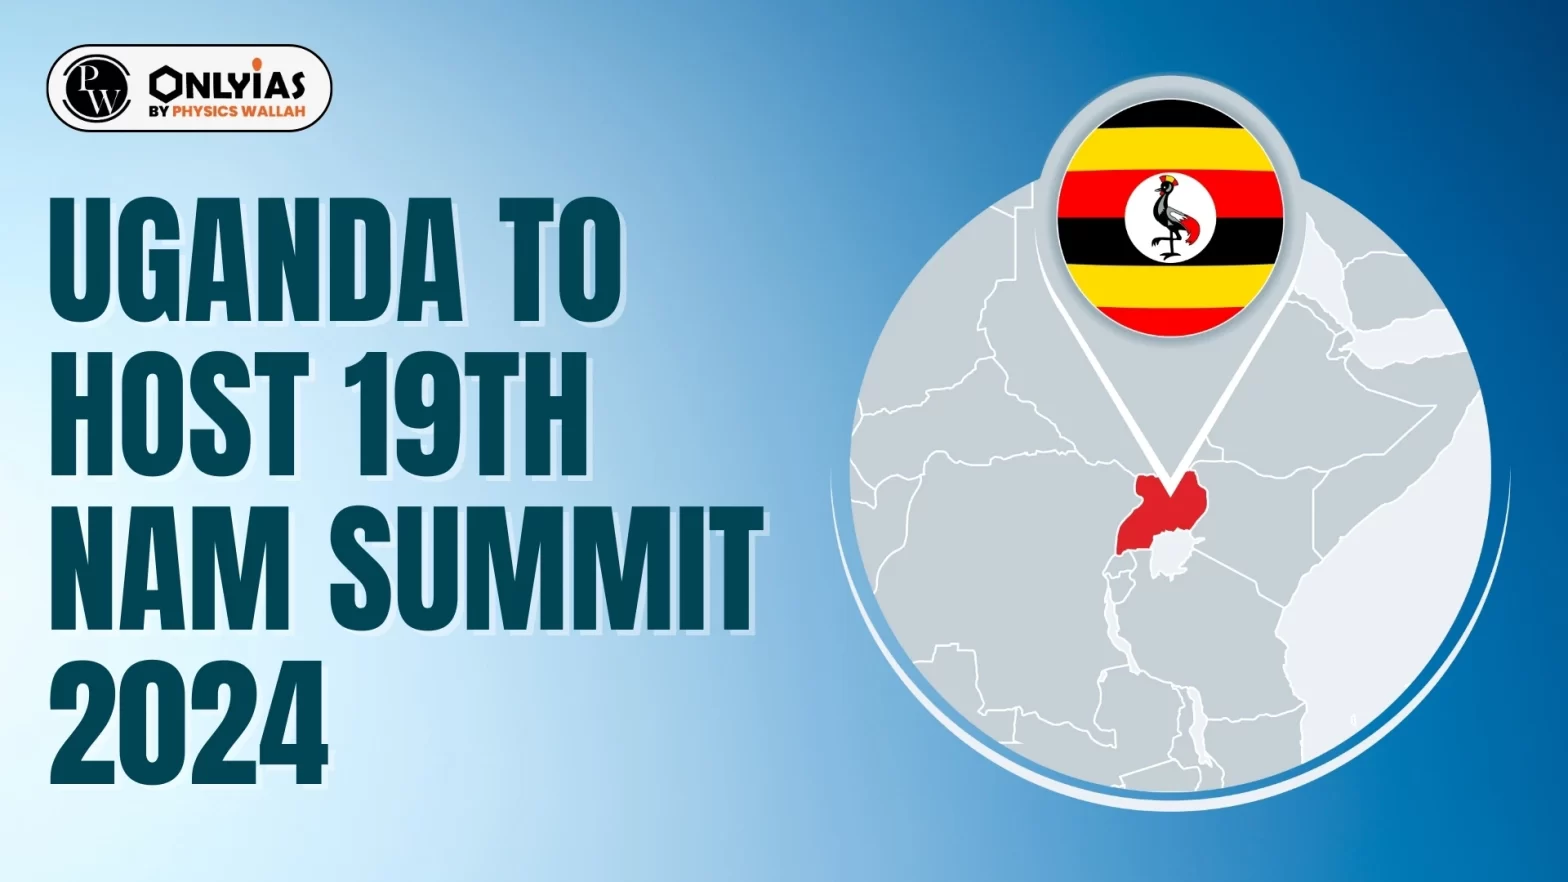 Uganda To Host 19th NAM Summit 2024 PWOnlyIAS